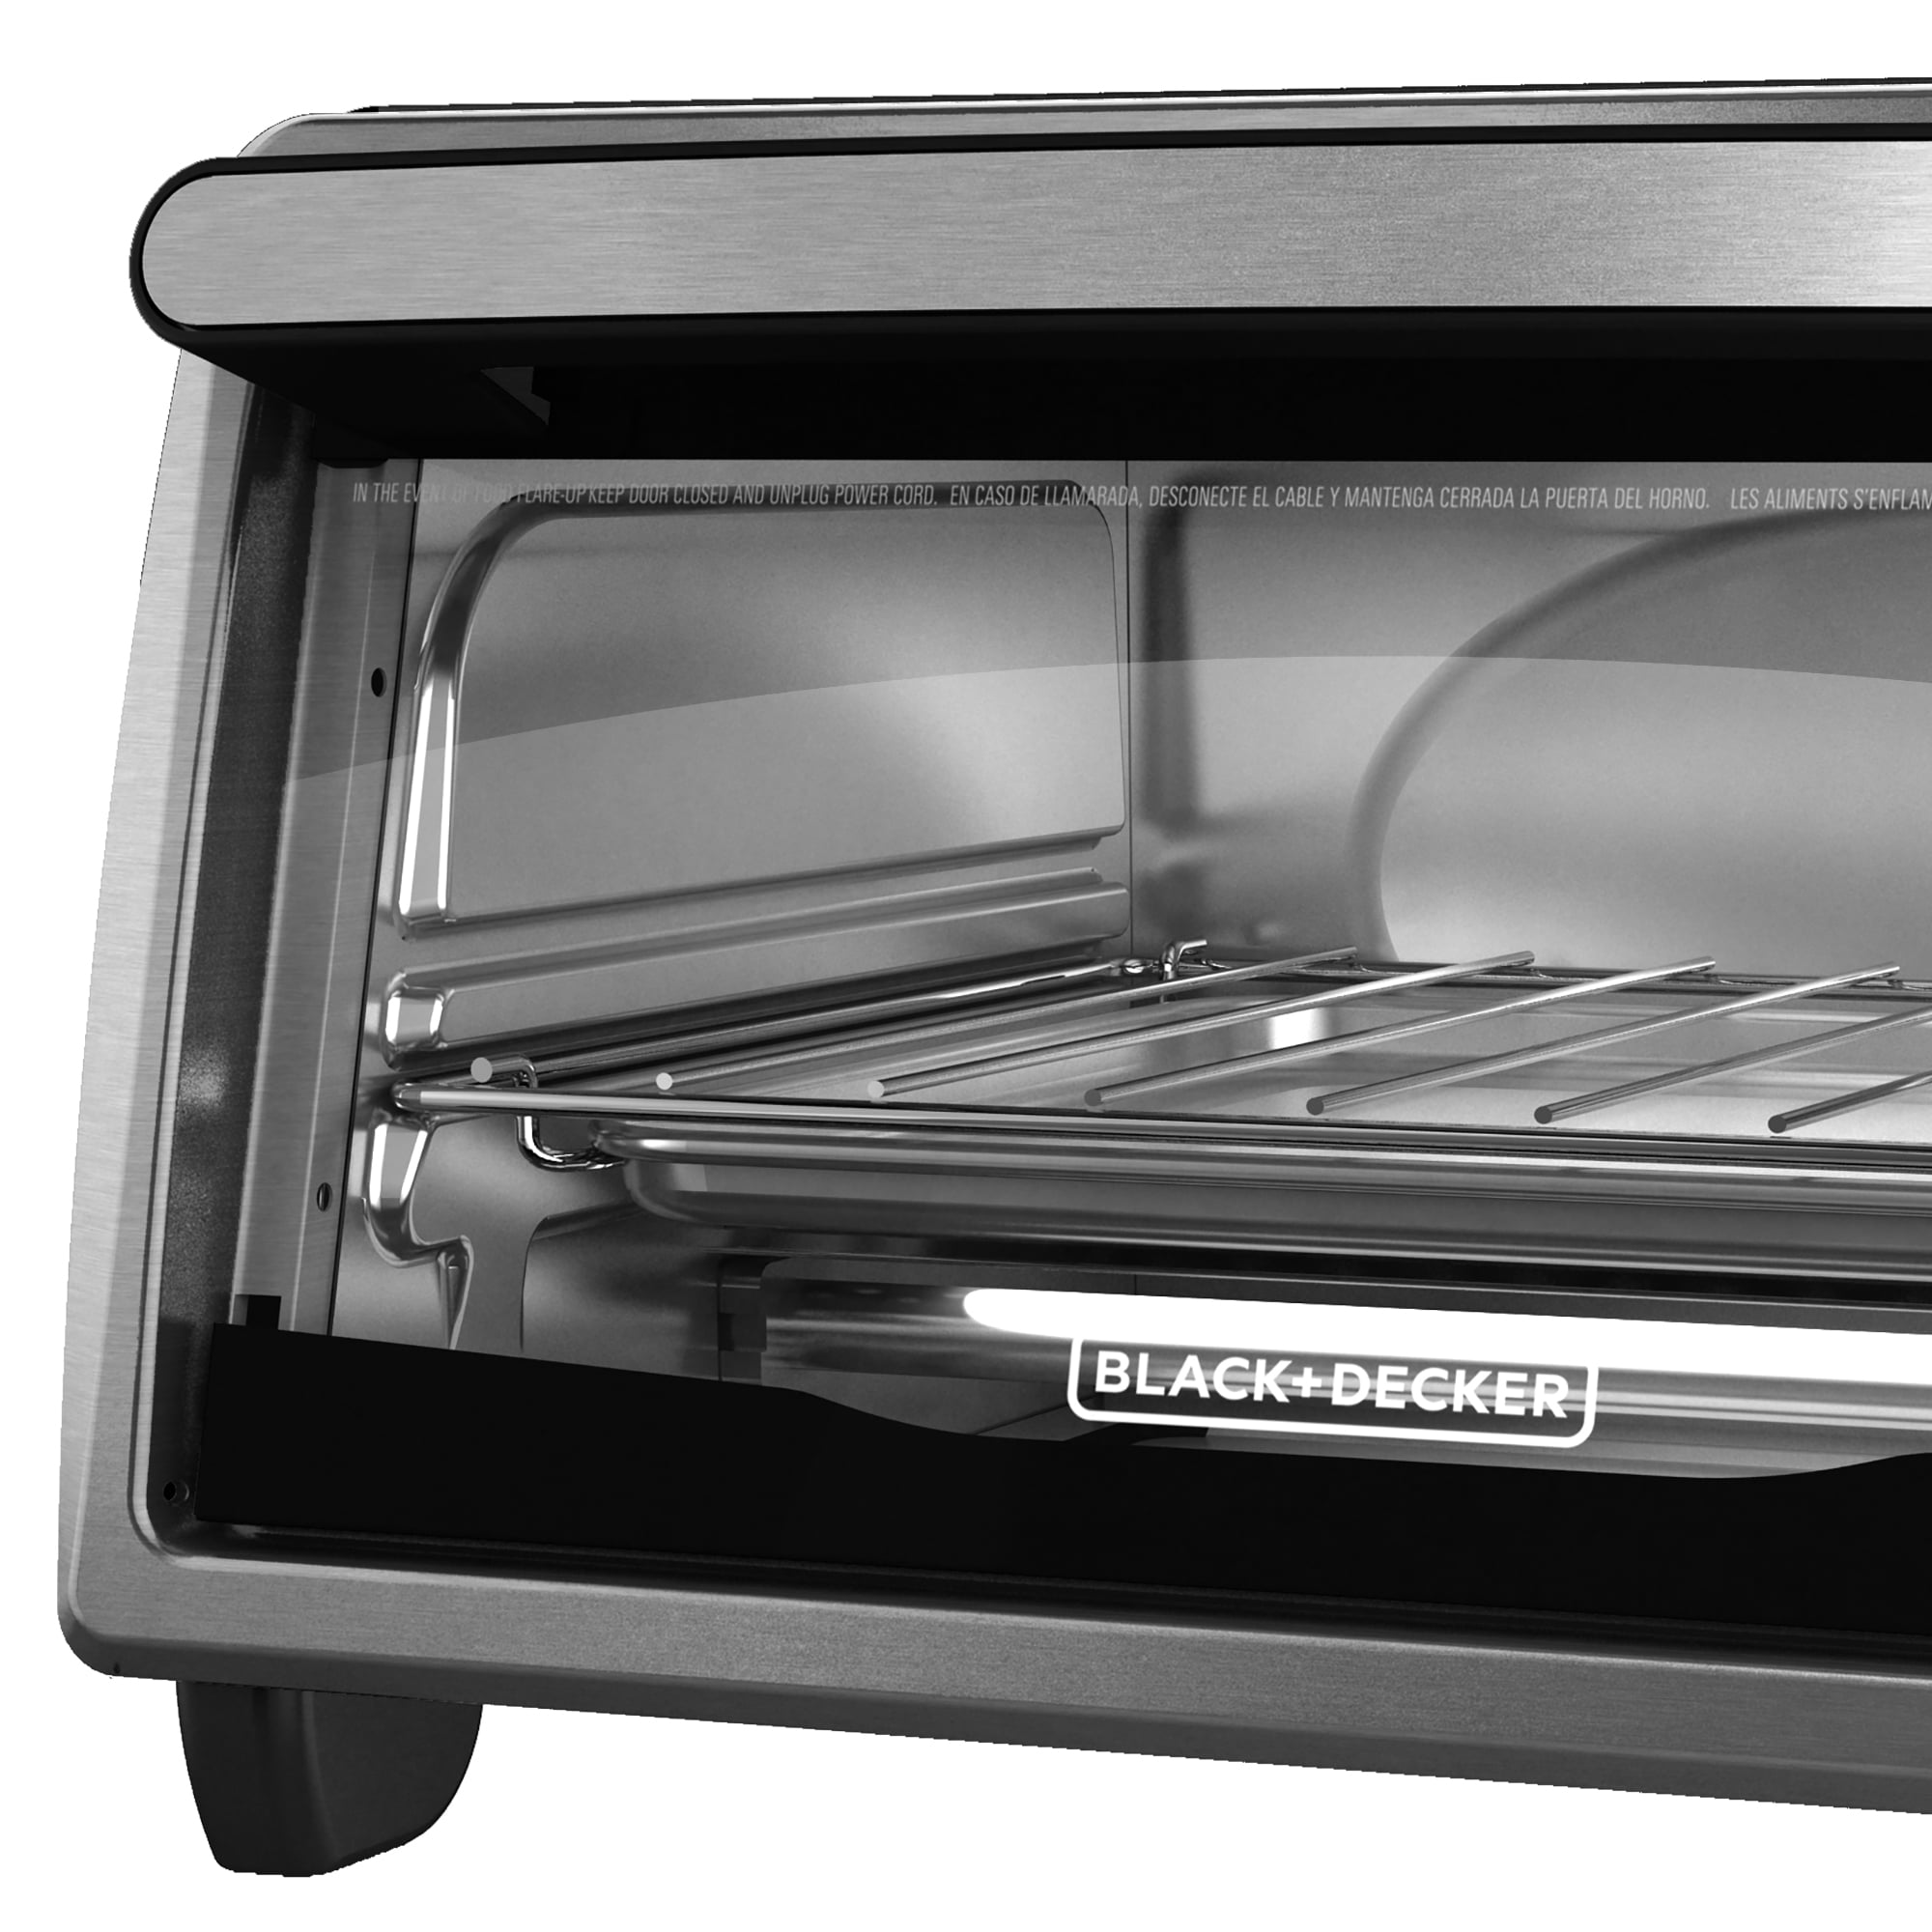 BLACK+DECKER 4-Slice Toaster Oven $20.38 (Lowest Price)